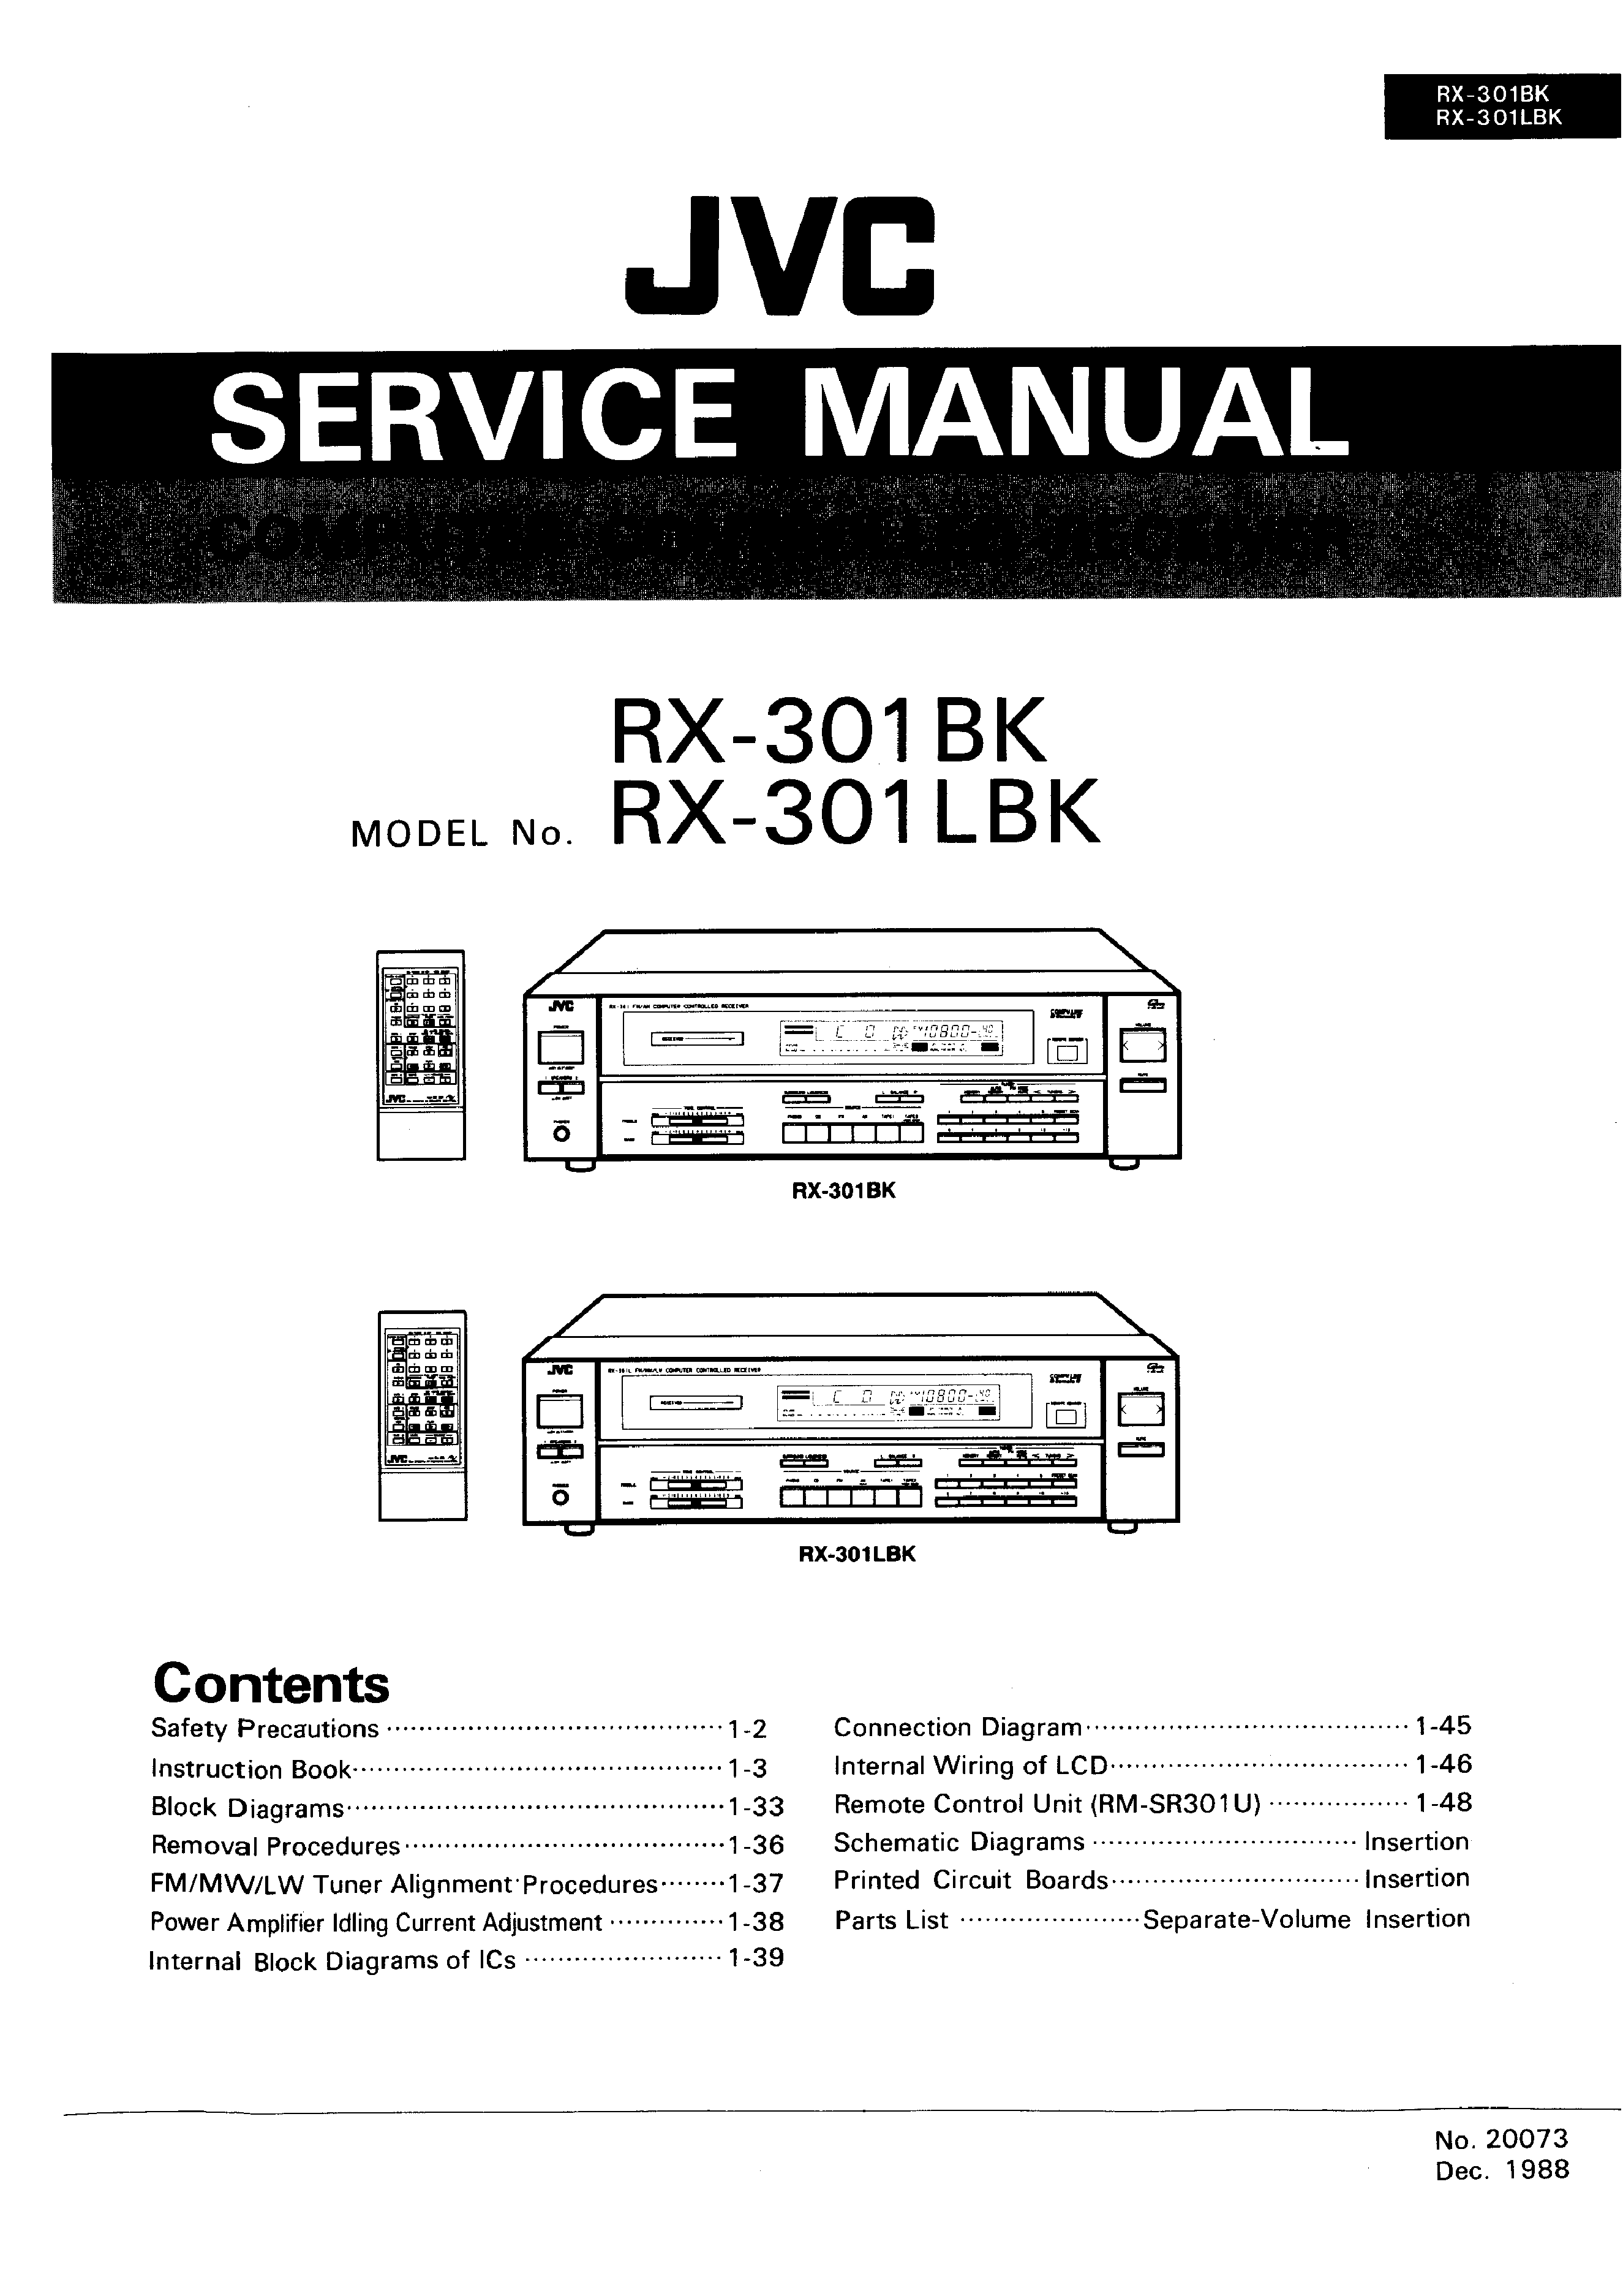 JVC  Original Service Manual für RX 1001 VBK komplett  englisch 